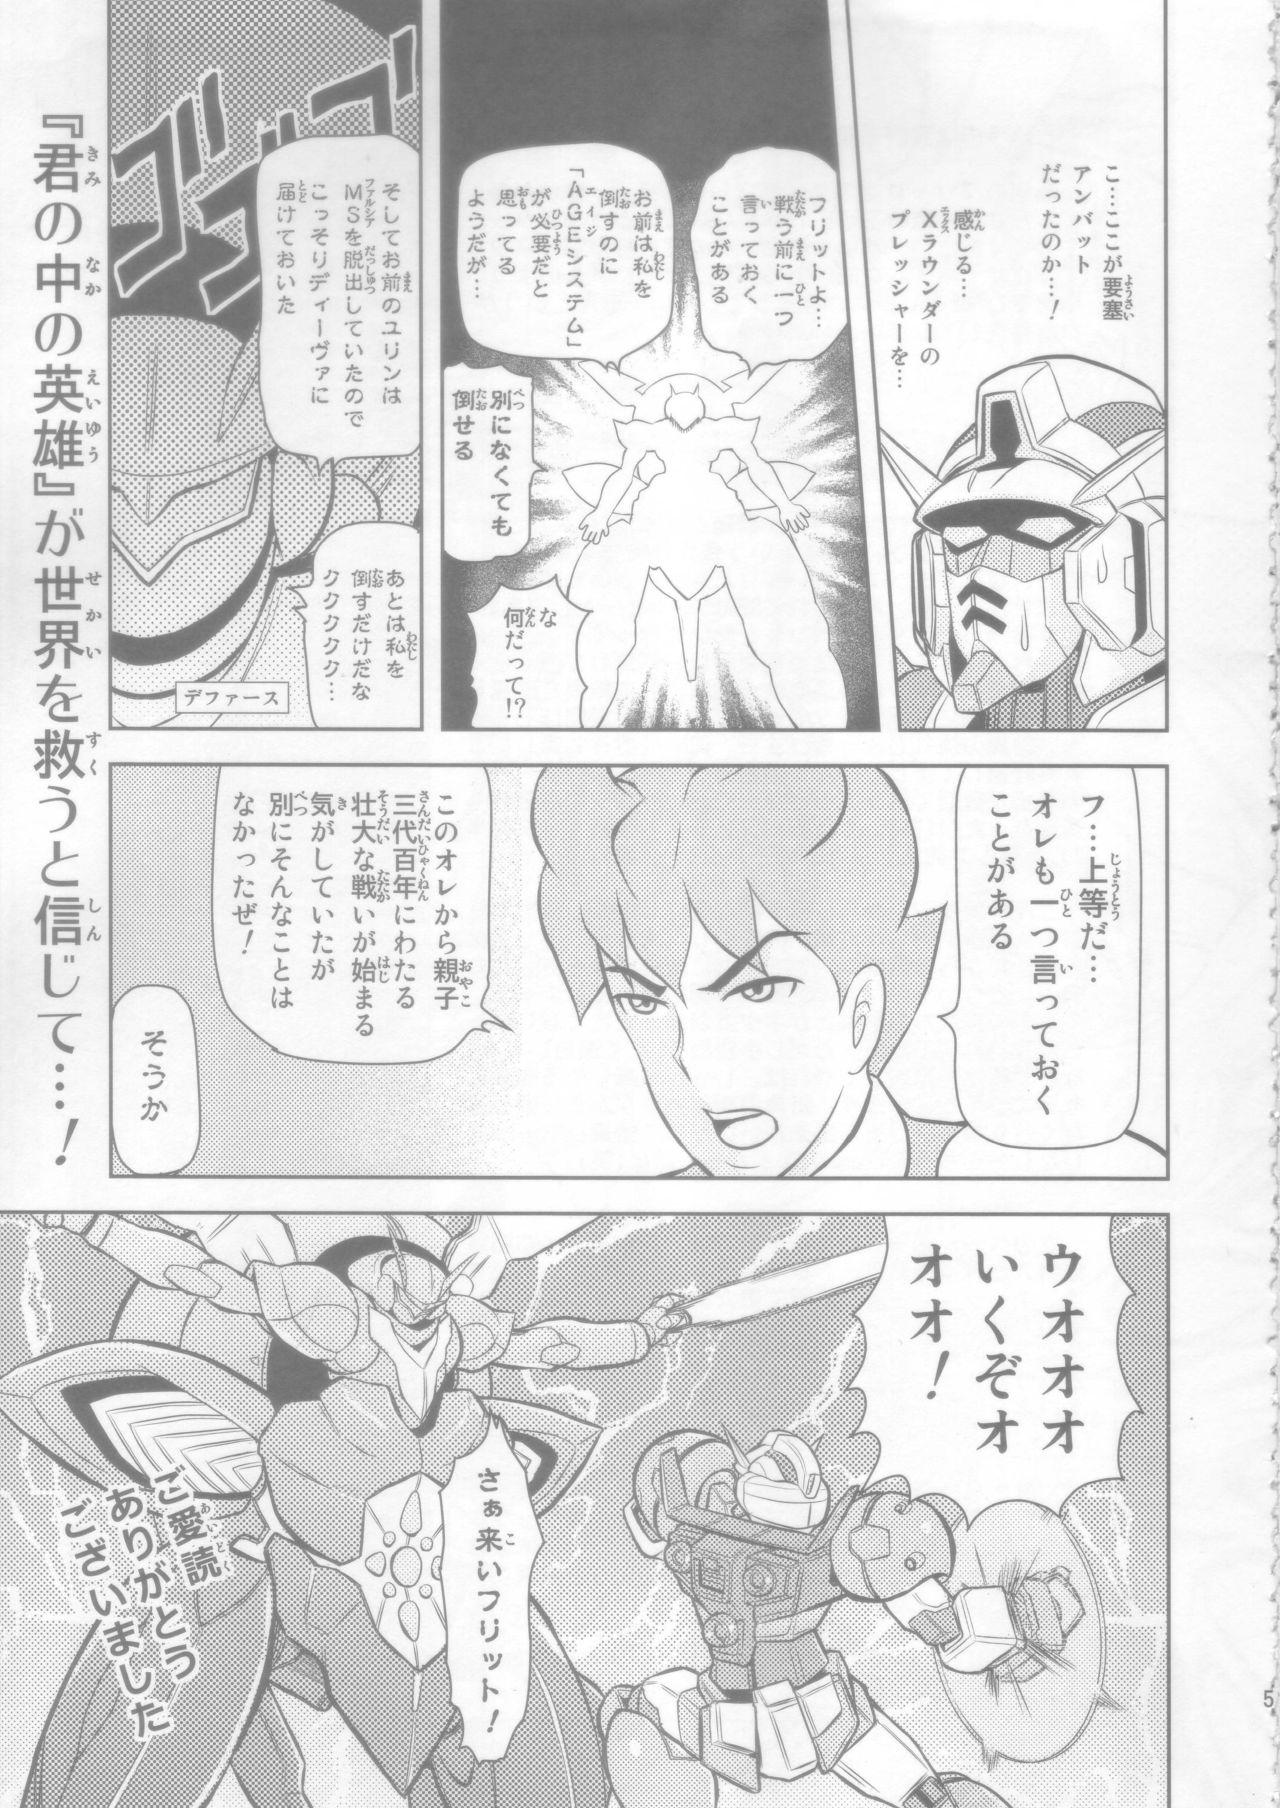 Groupsex AGE MASTER FLIT VIRGIN FLIGHT:04 - Gundam age Culo Grande - Page 5